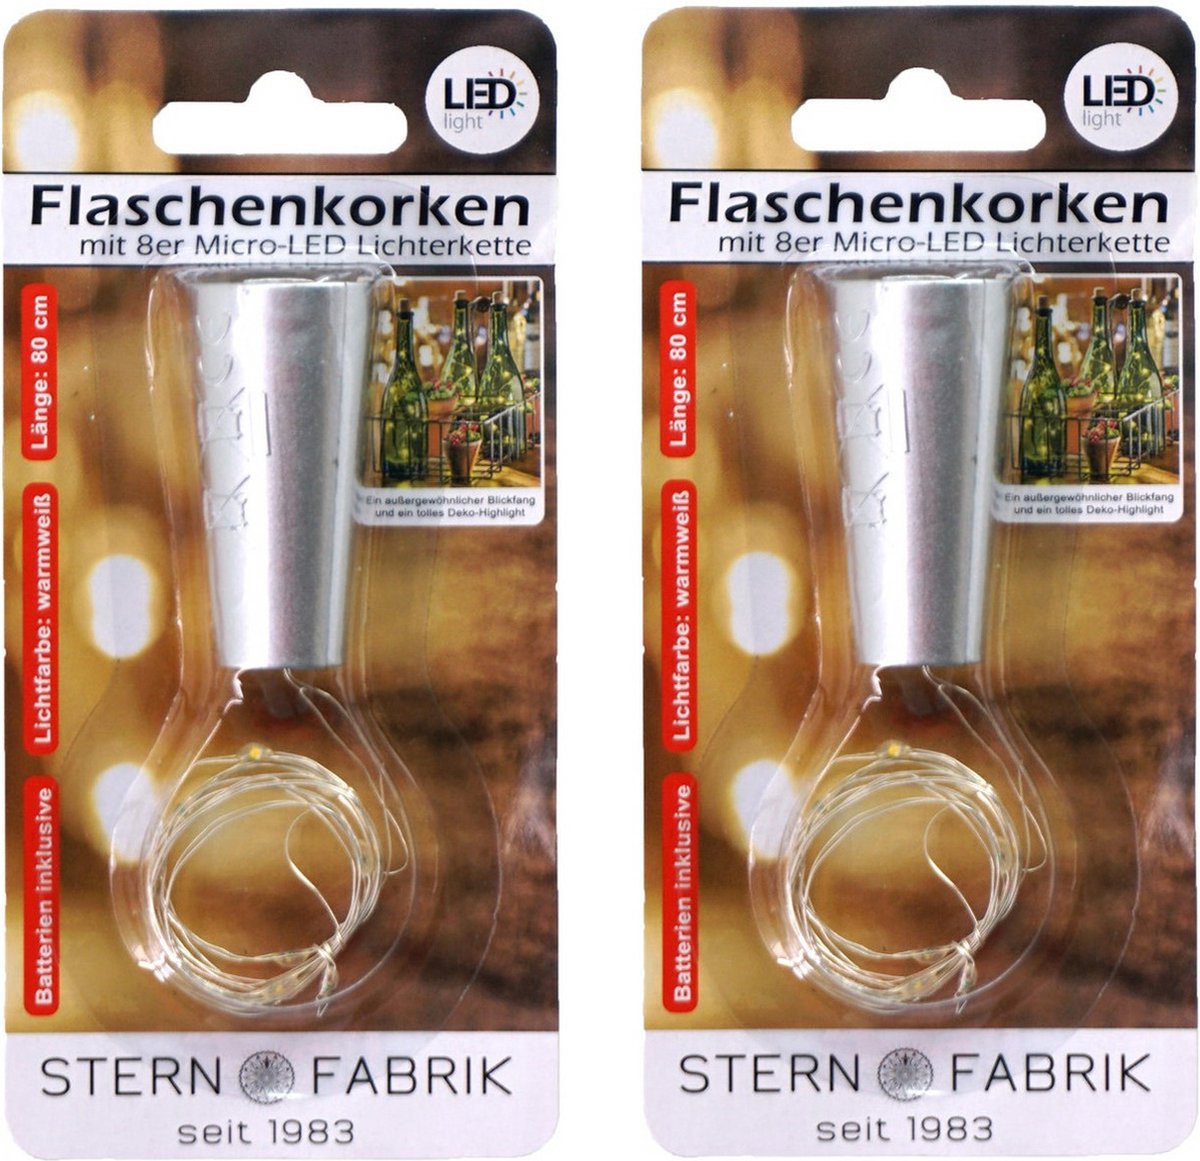 Stern Fabrik flesverlichting kurk - 2x - lichtsnoer - zilver - LED - 80 cm - bottle lights